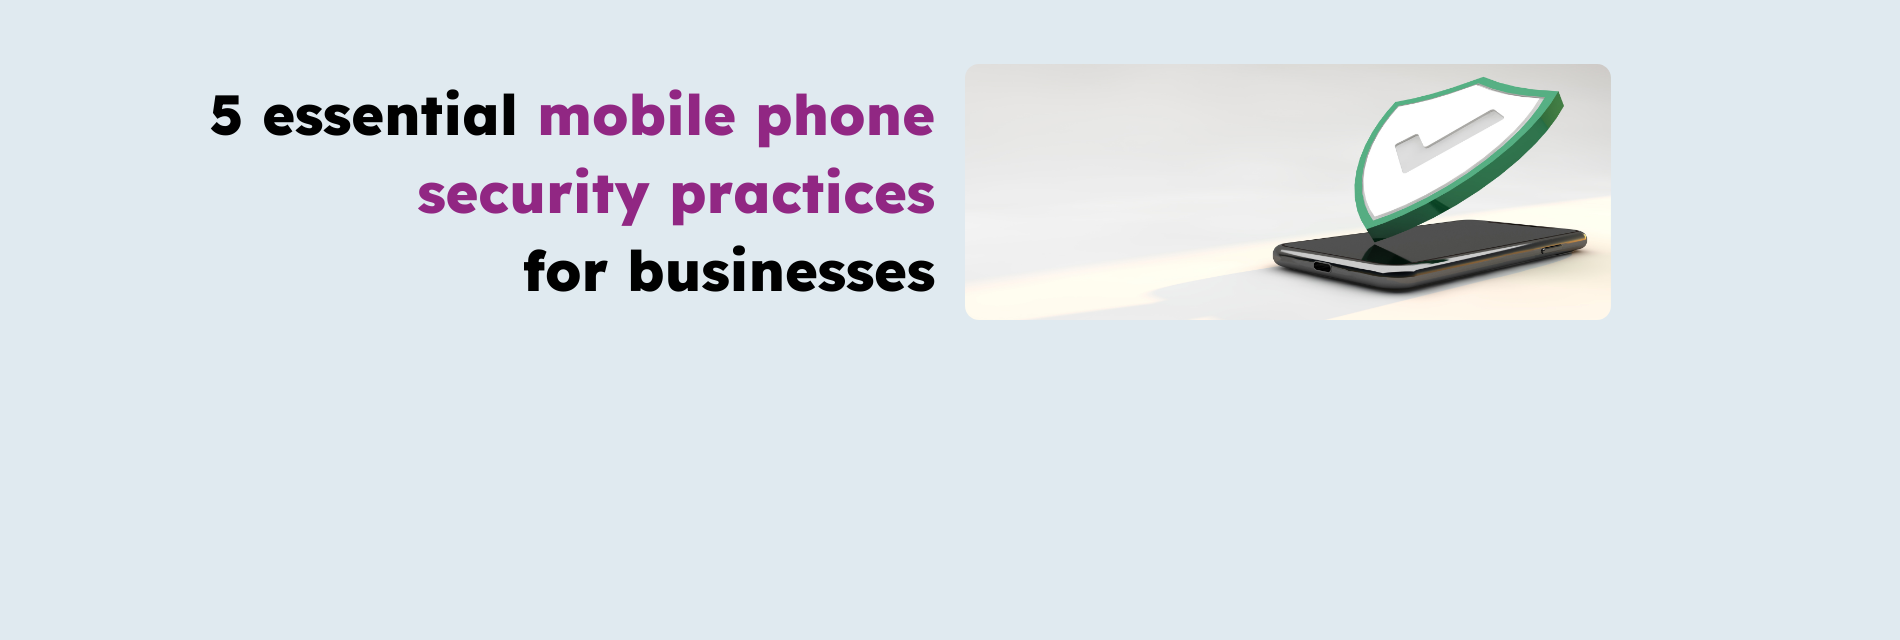 5 best mobile phone security practices landscape